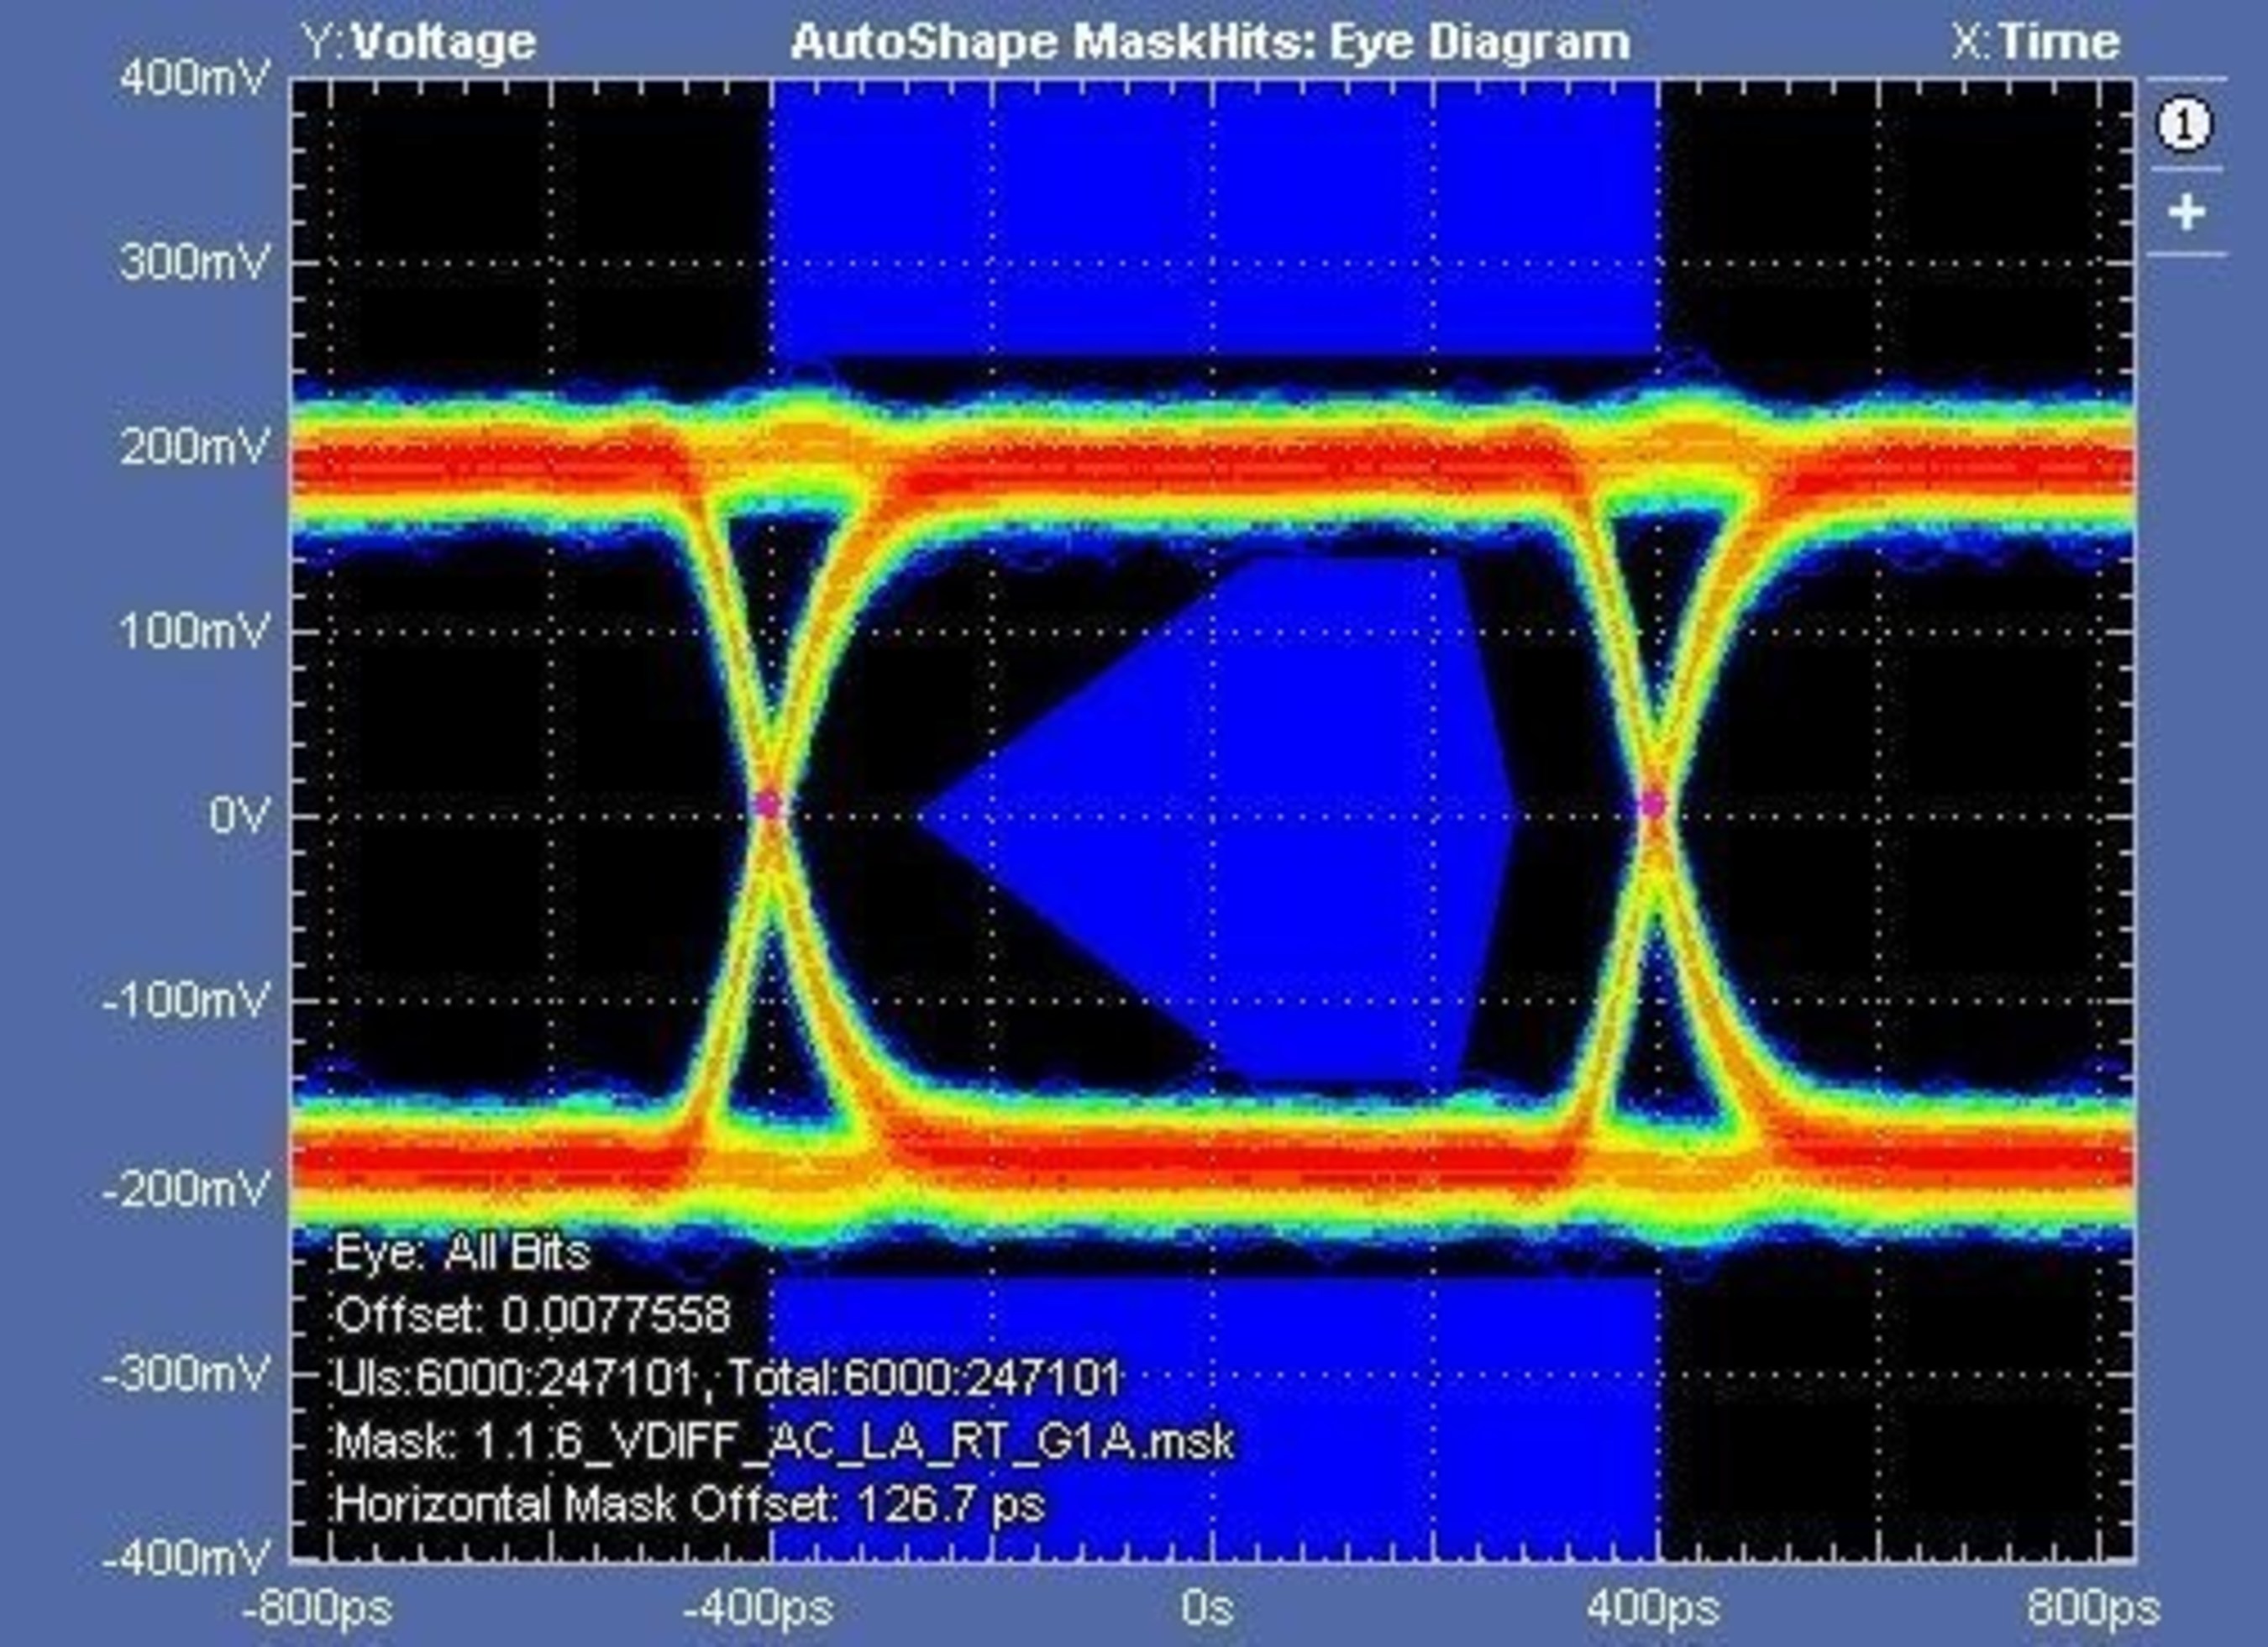 Tektronix Transmitter Eye Diagram measurement for HS G1 auto shape to adjust mask hits and optimal eye opening.